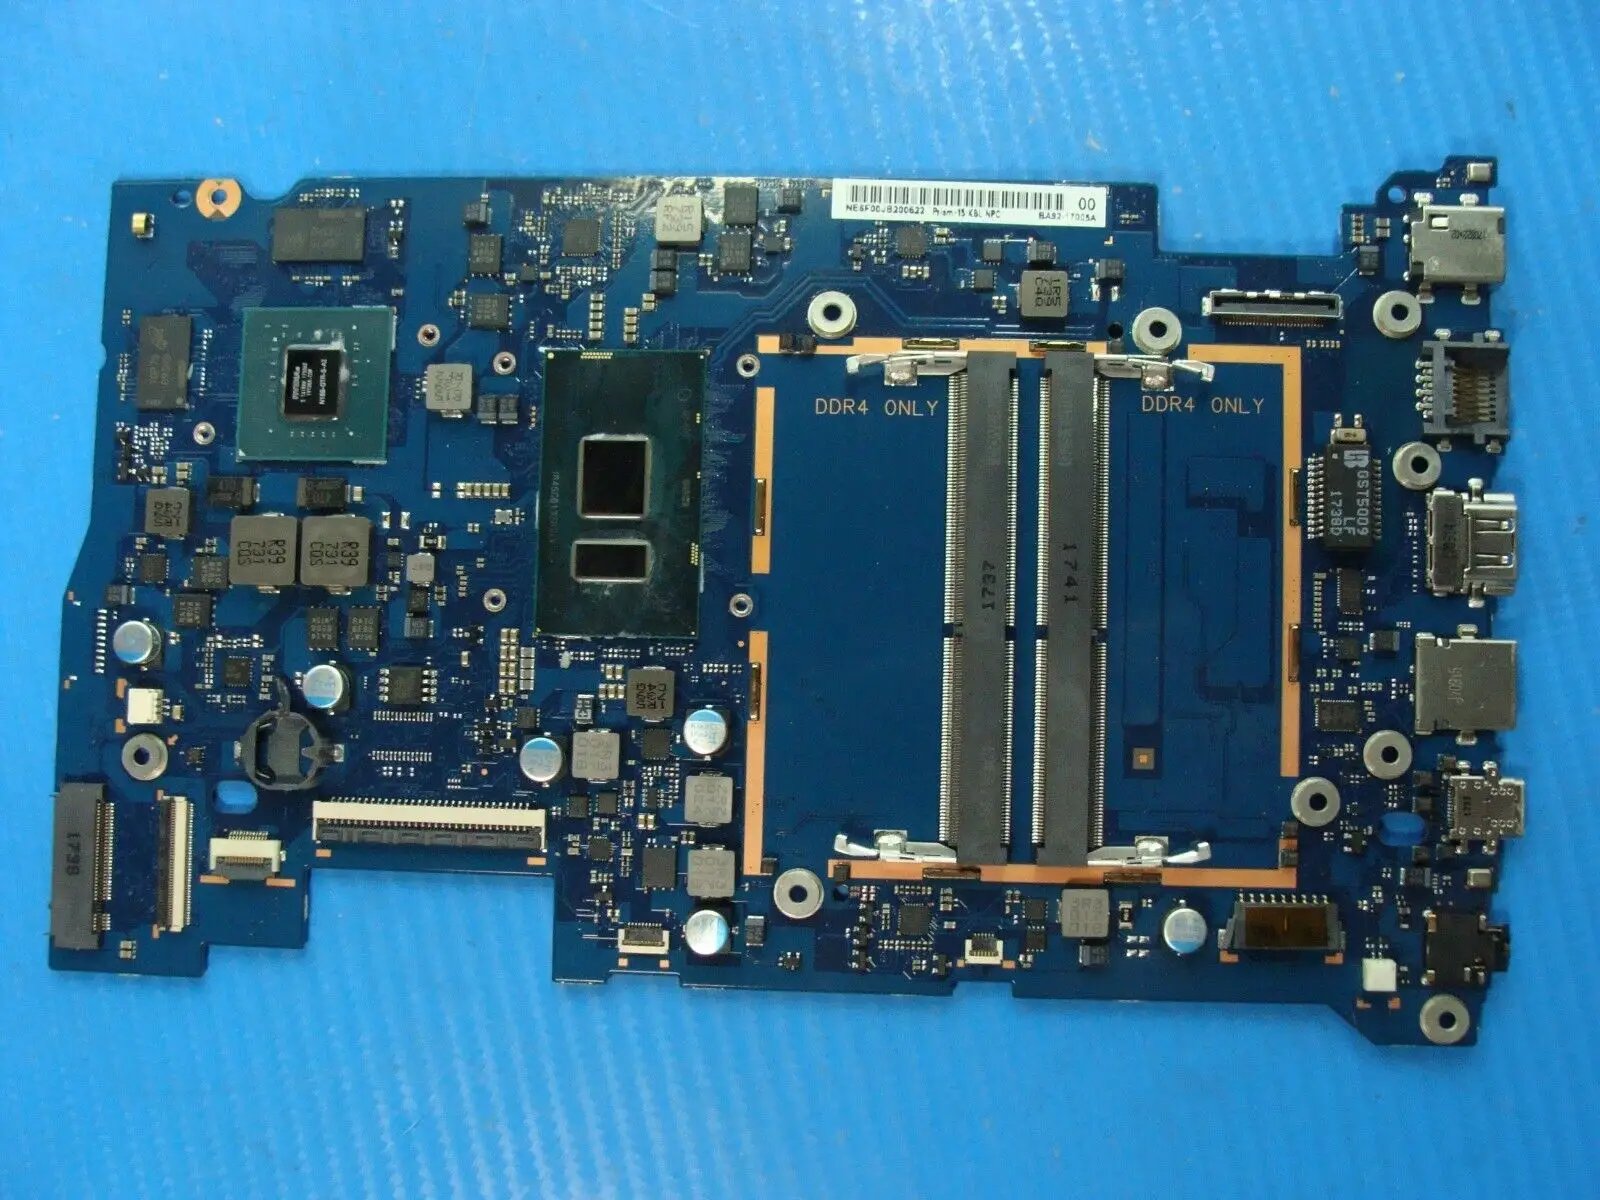 Samsung Notebook 7 NP740U5M-X01US i7-7500u 2.7GHz Motherboard BA92-17005B AS IS